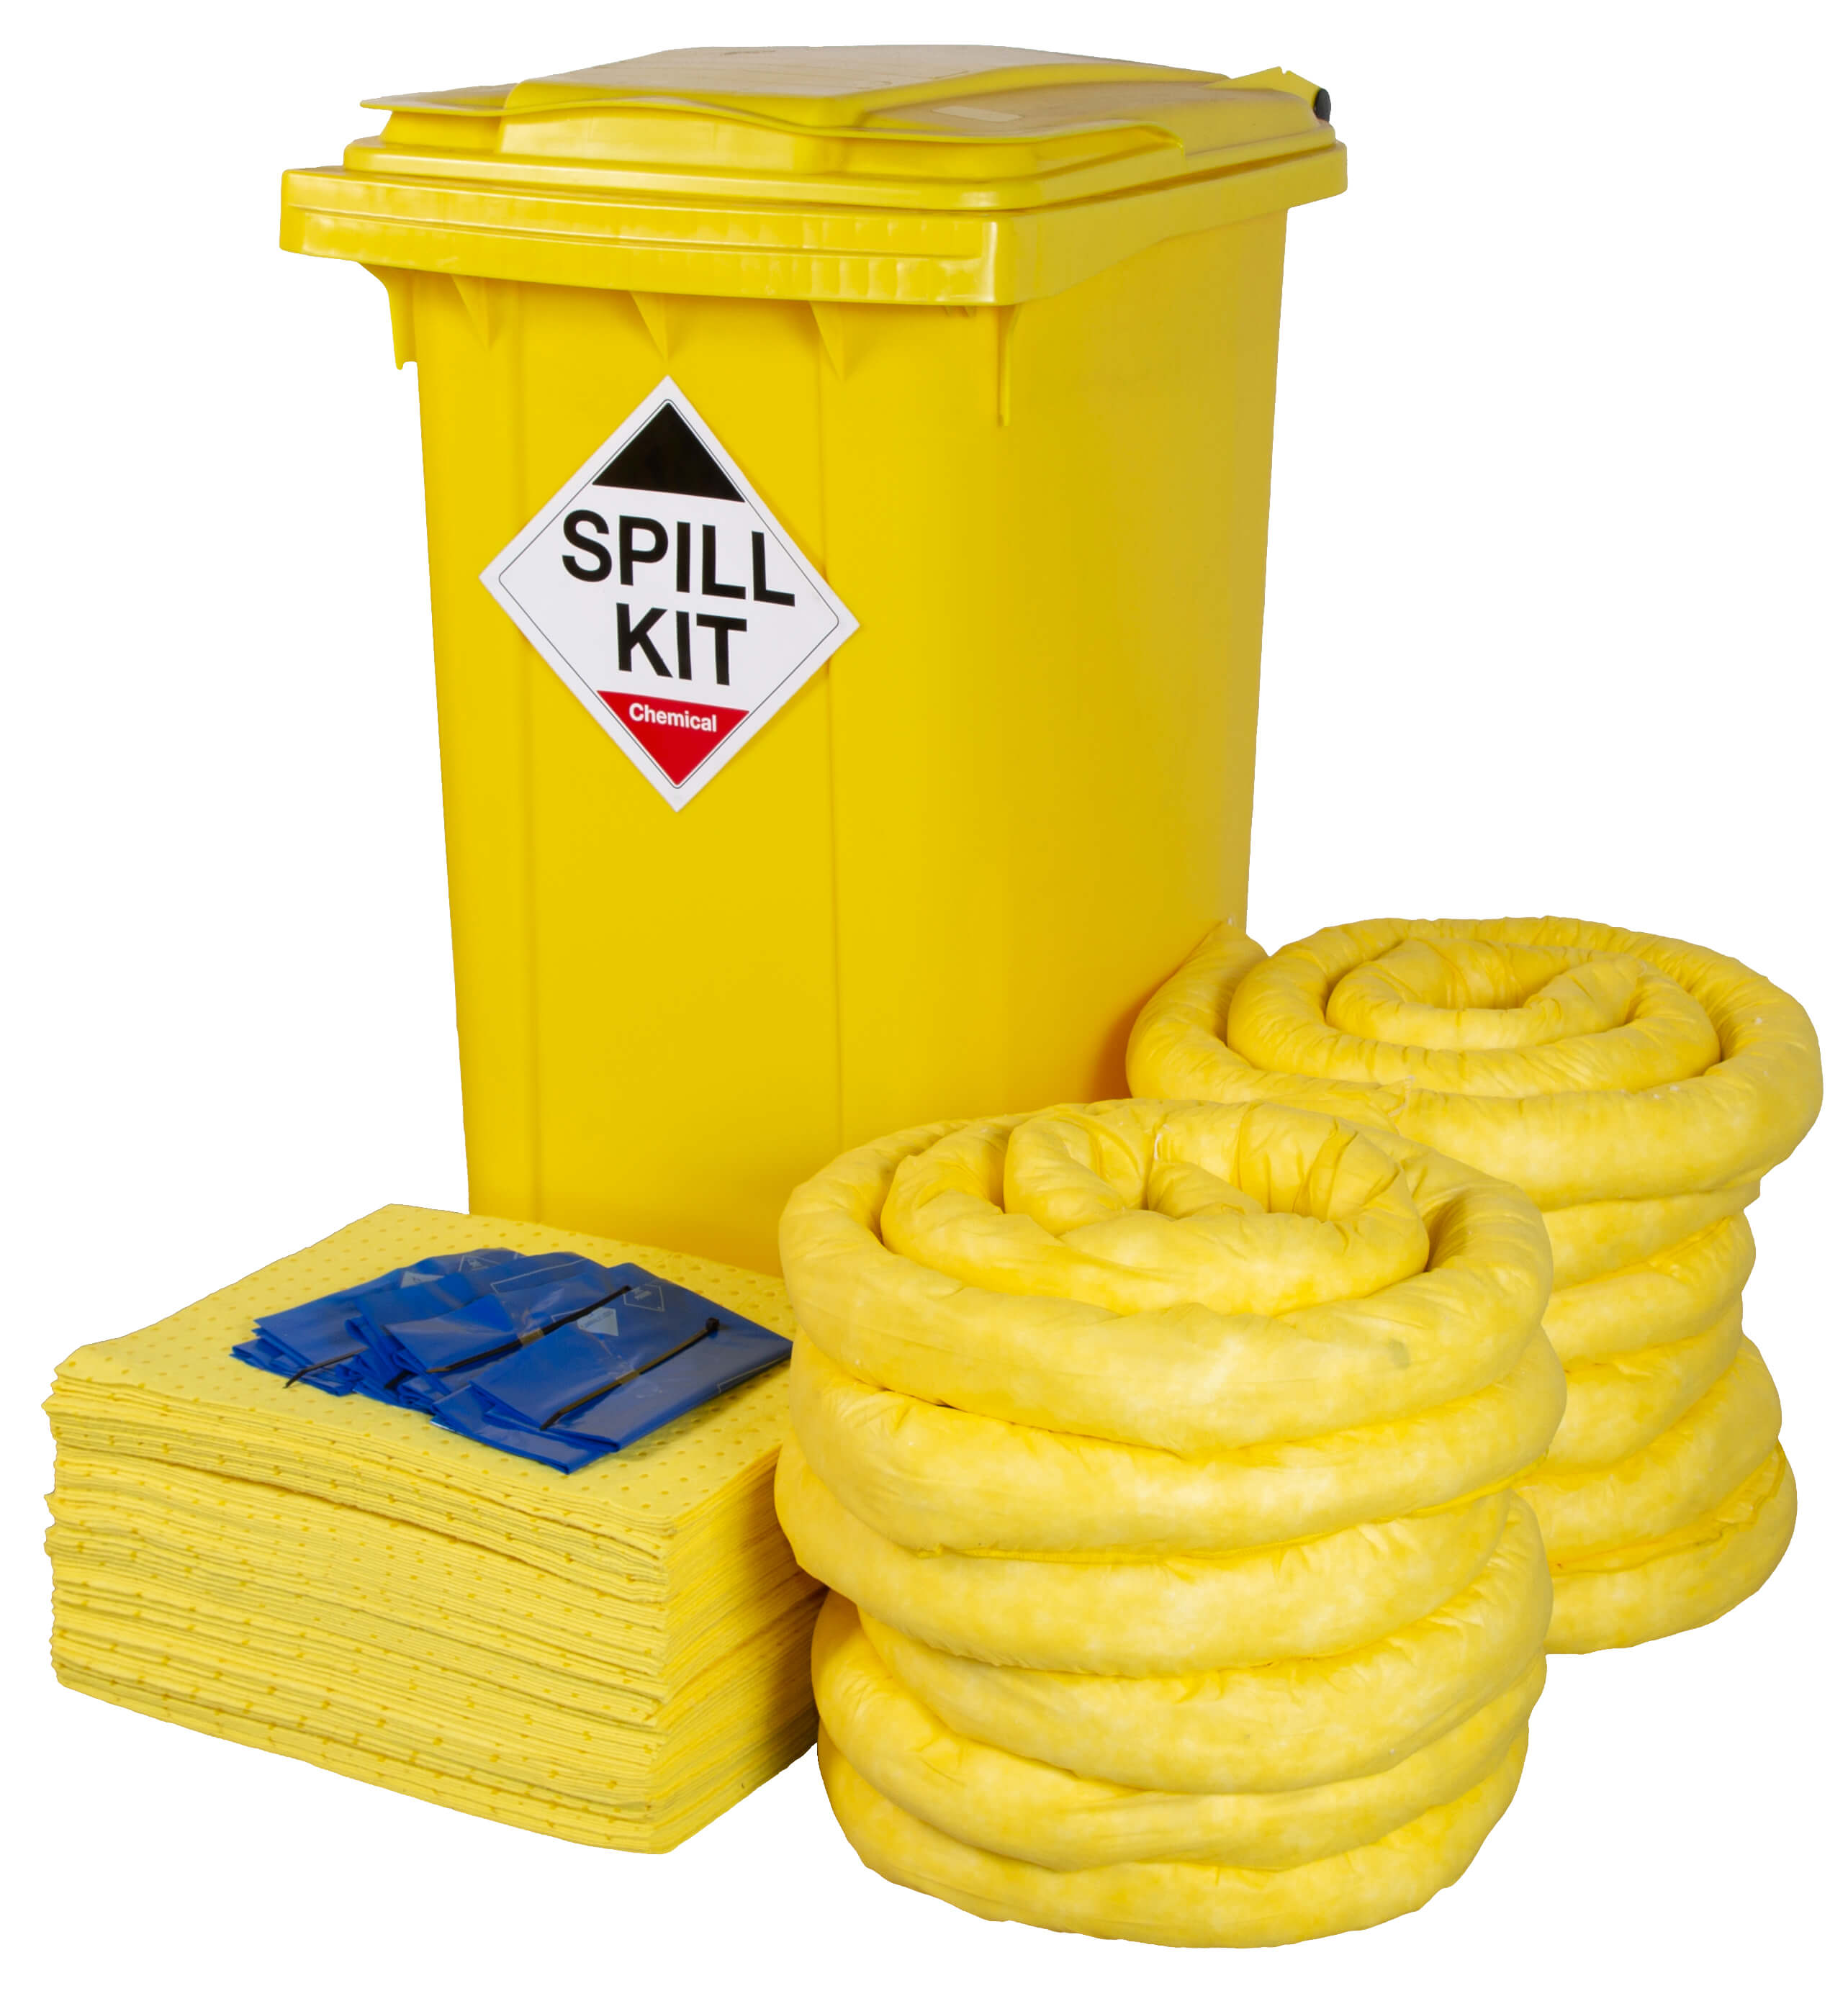 Chemical Kit - Yellow Wheelie Bin